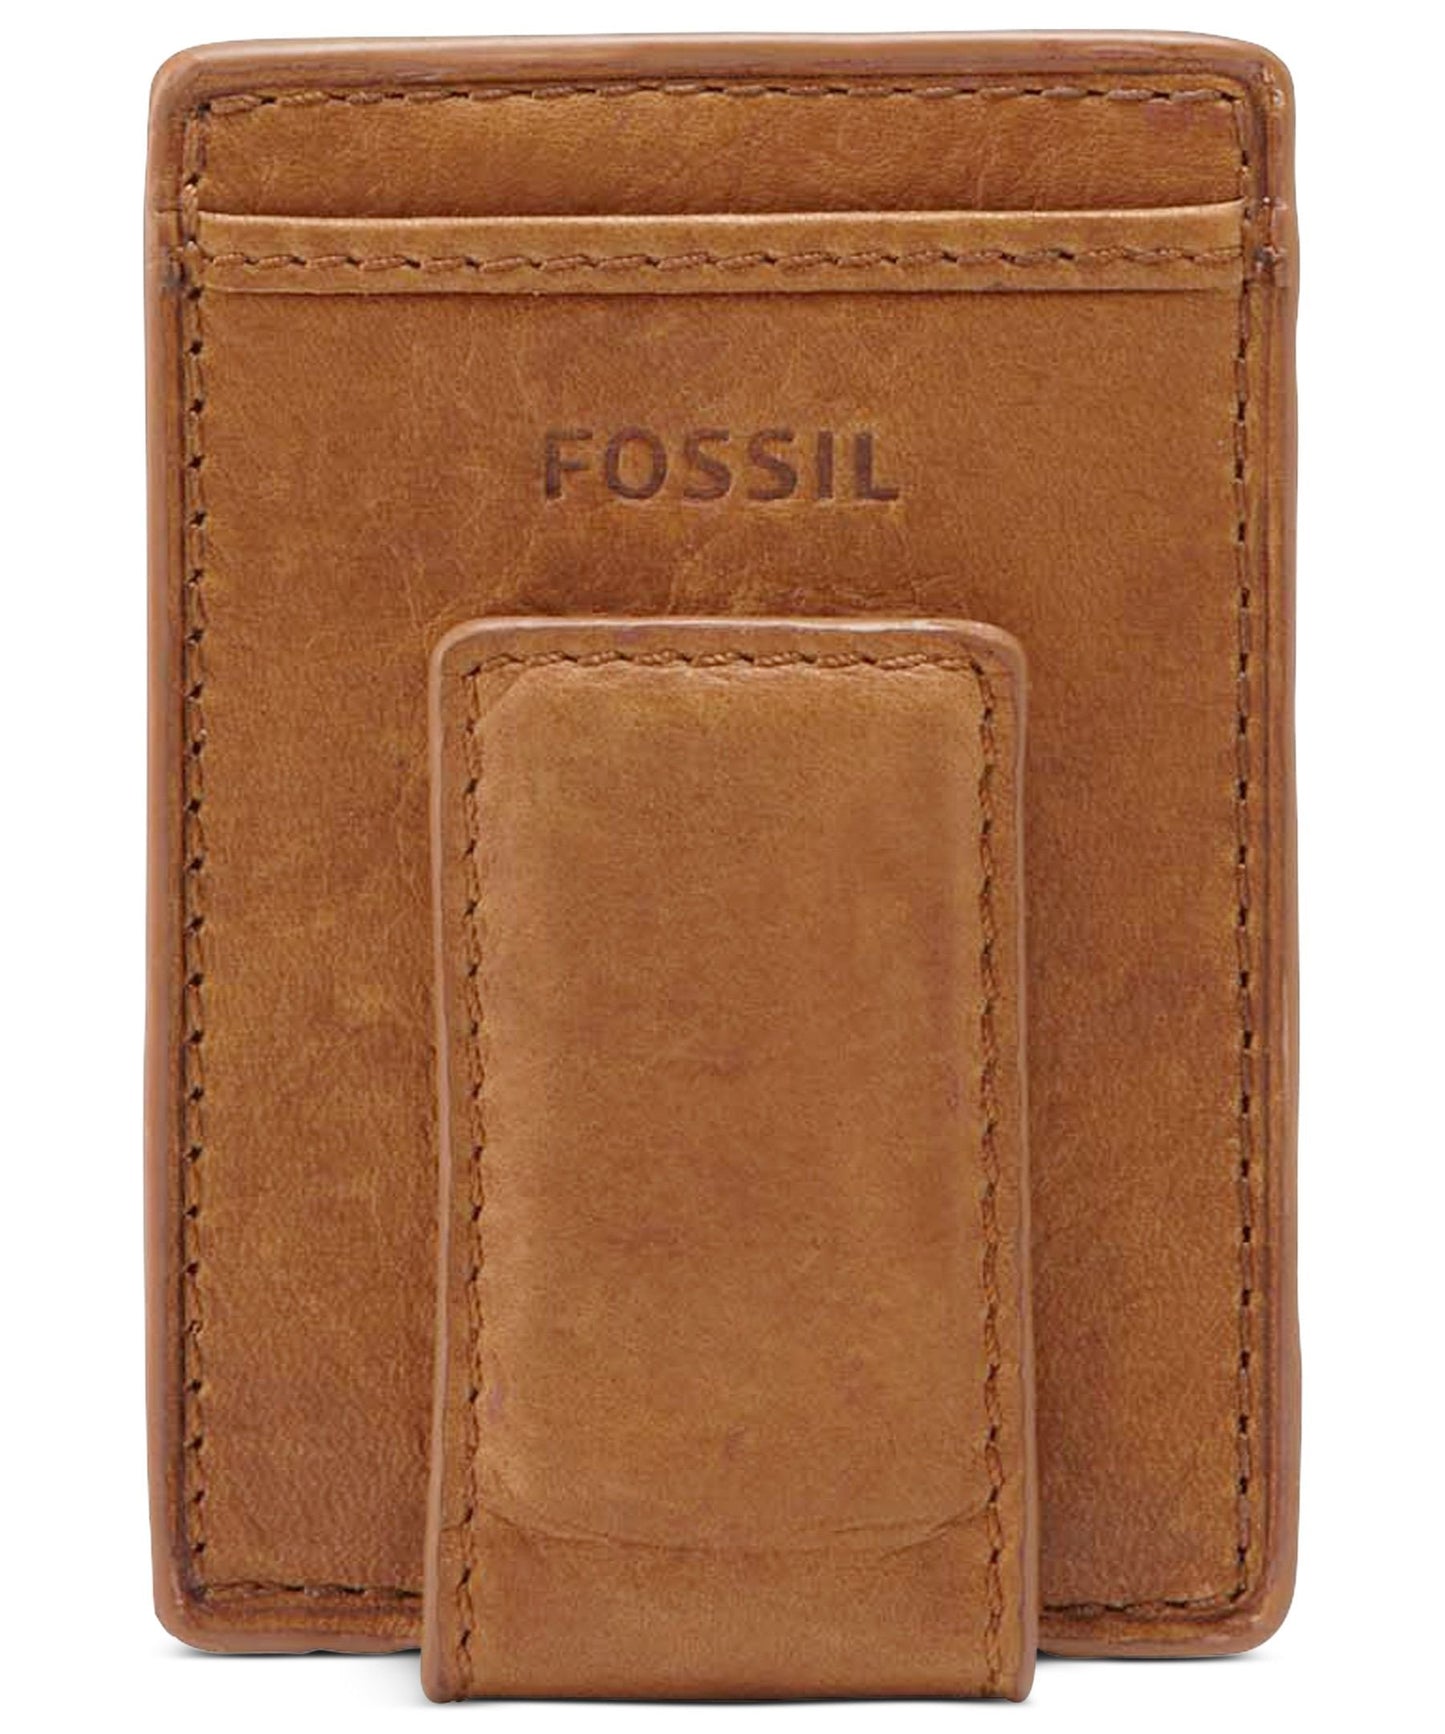 Fossil Ingram Magnetic Card Case Leather Wallet